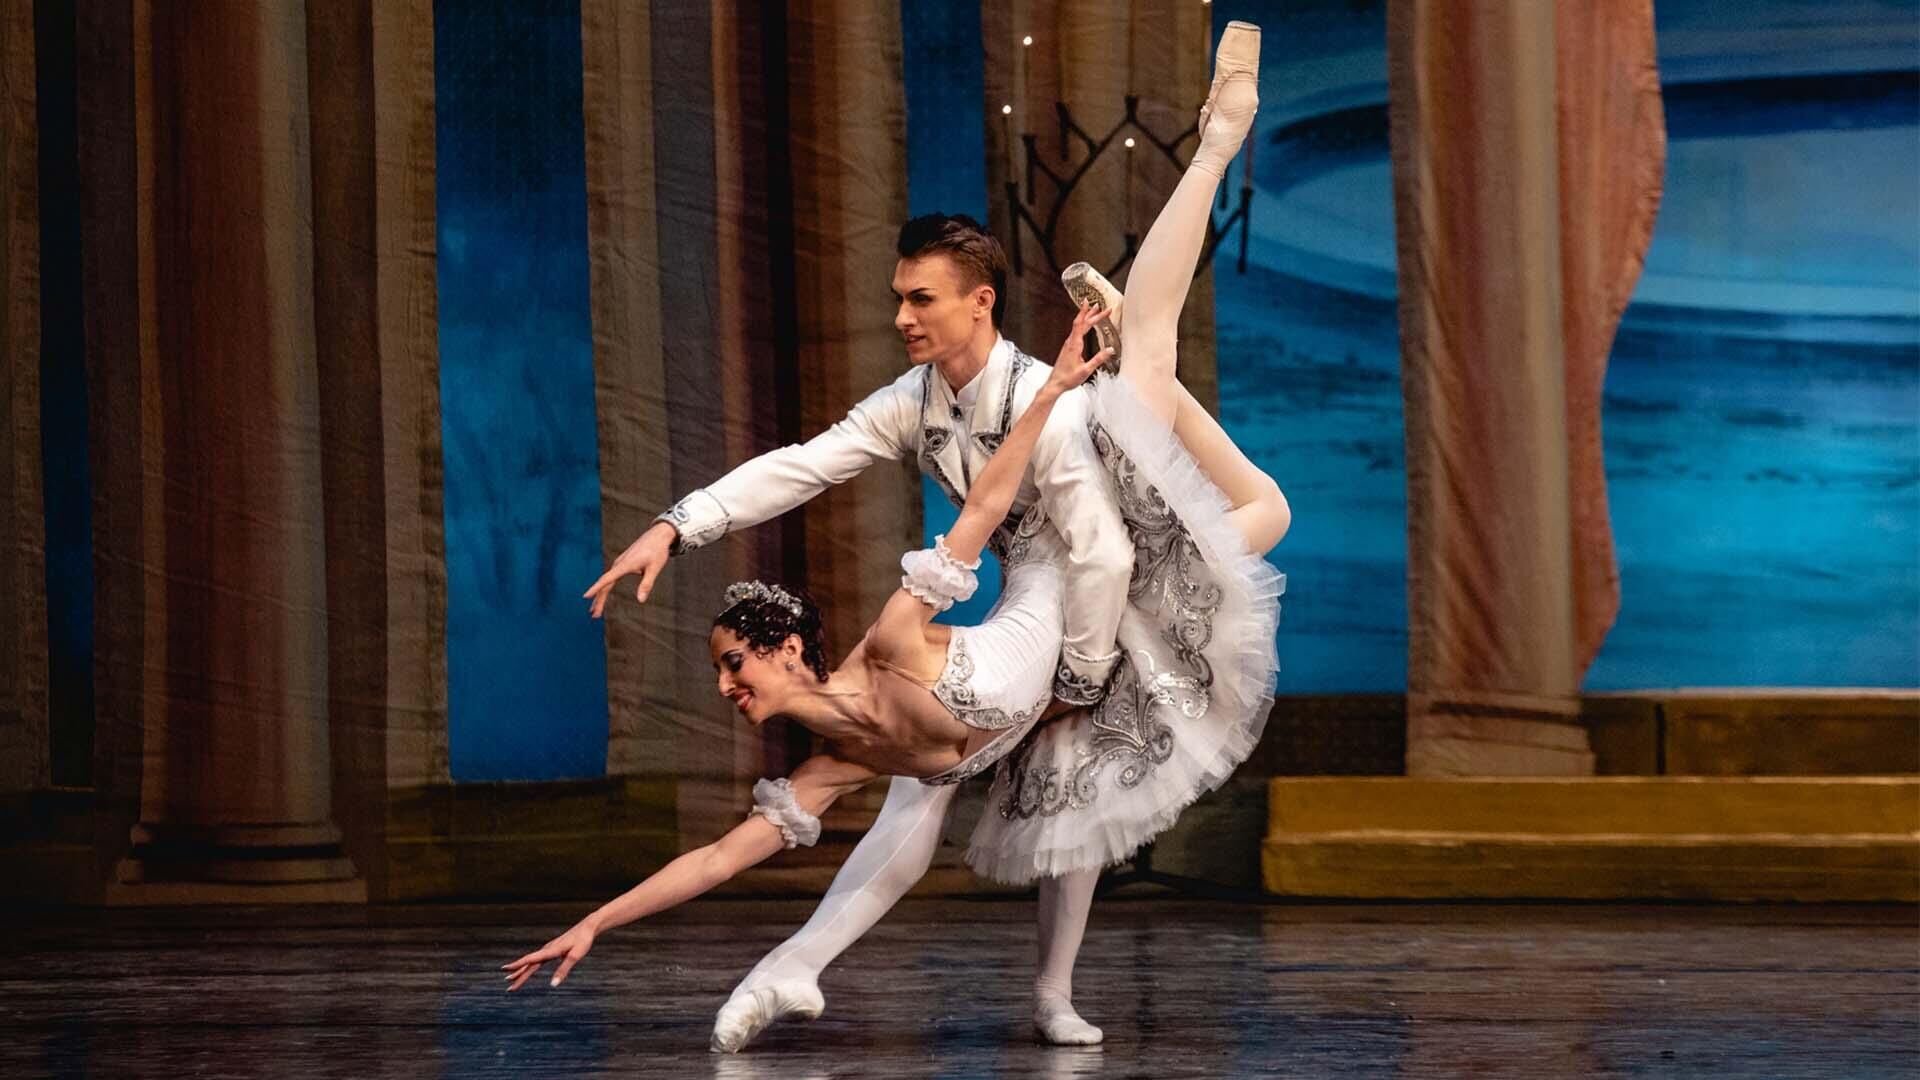 The Ukrainian National Ballet